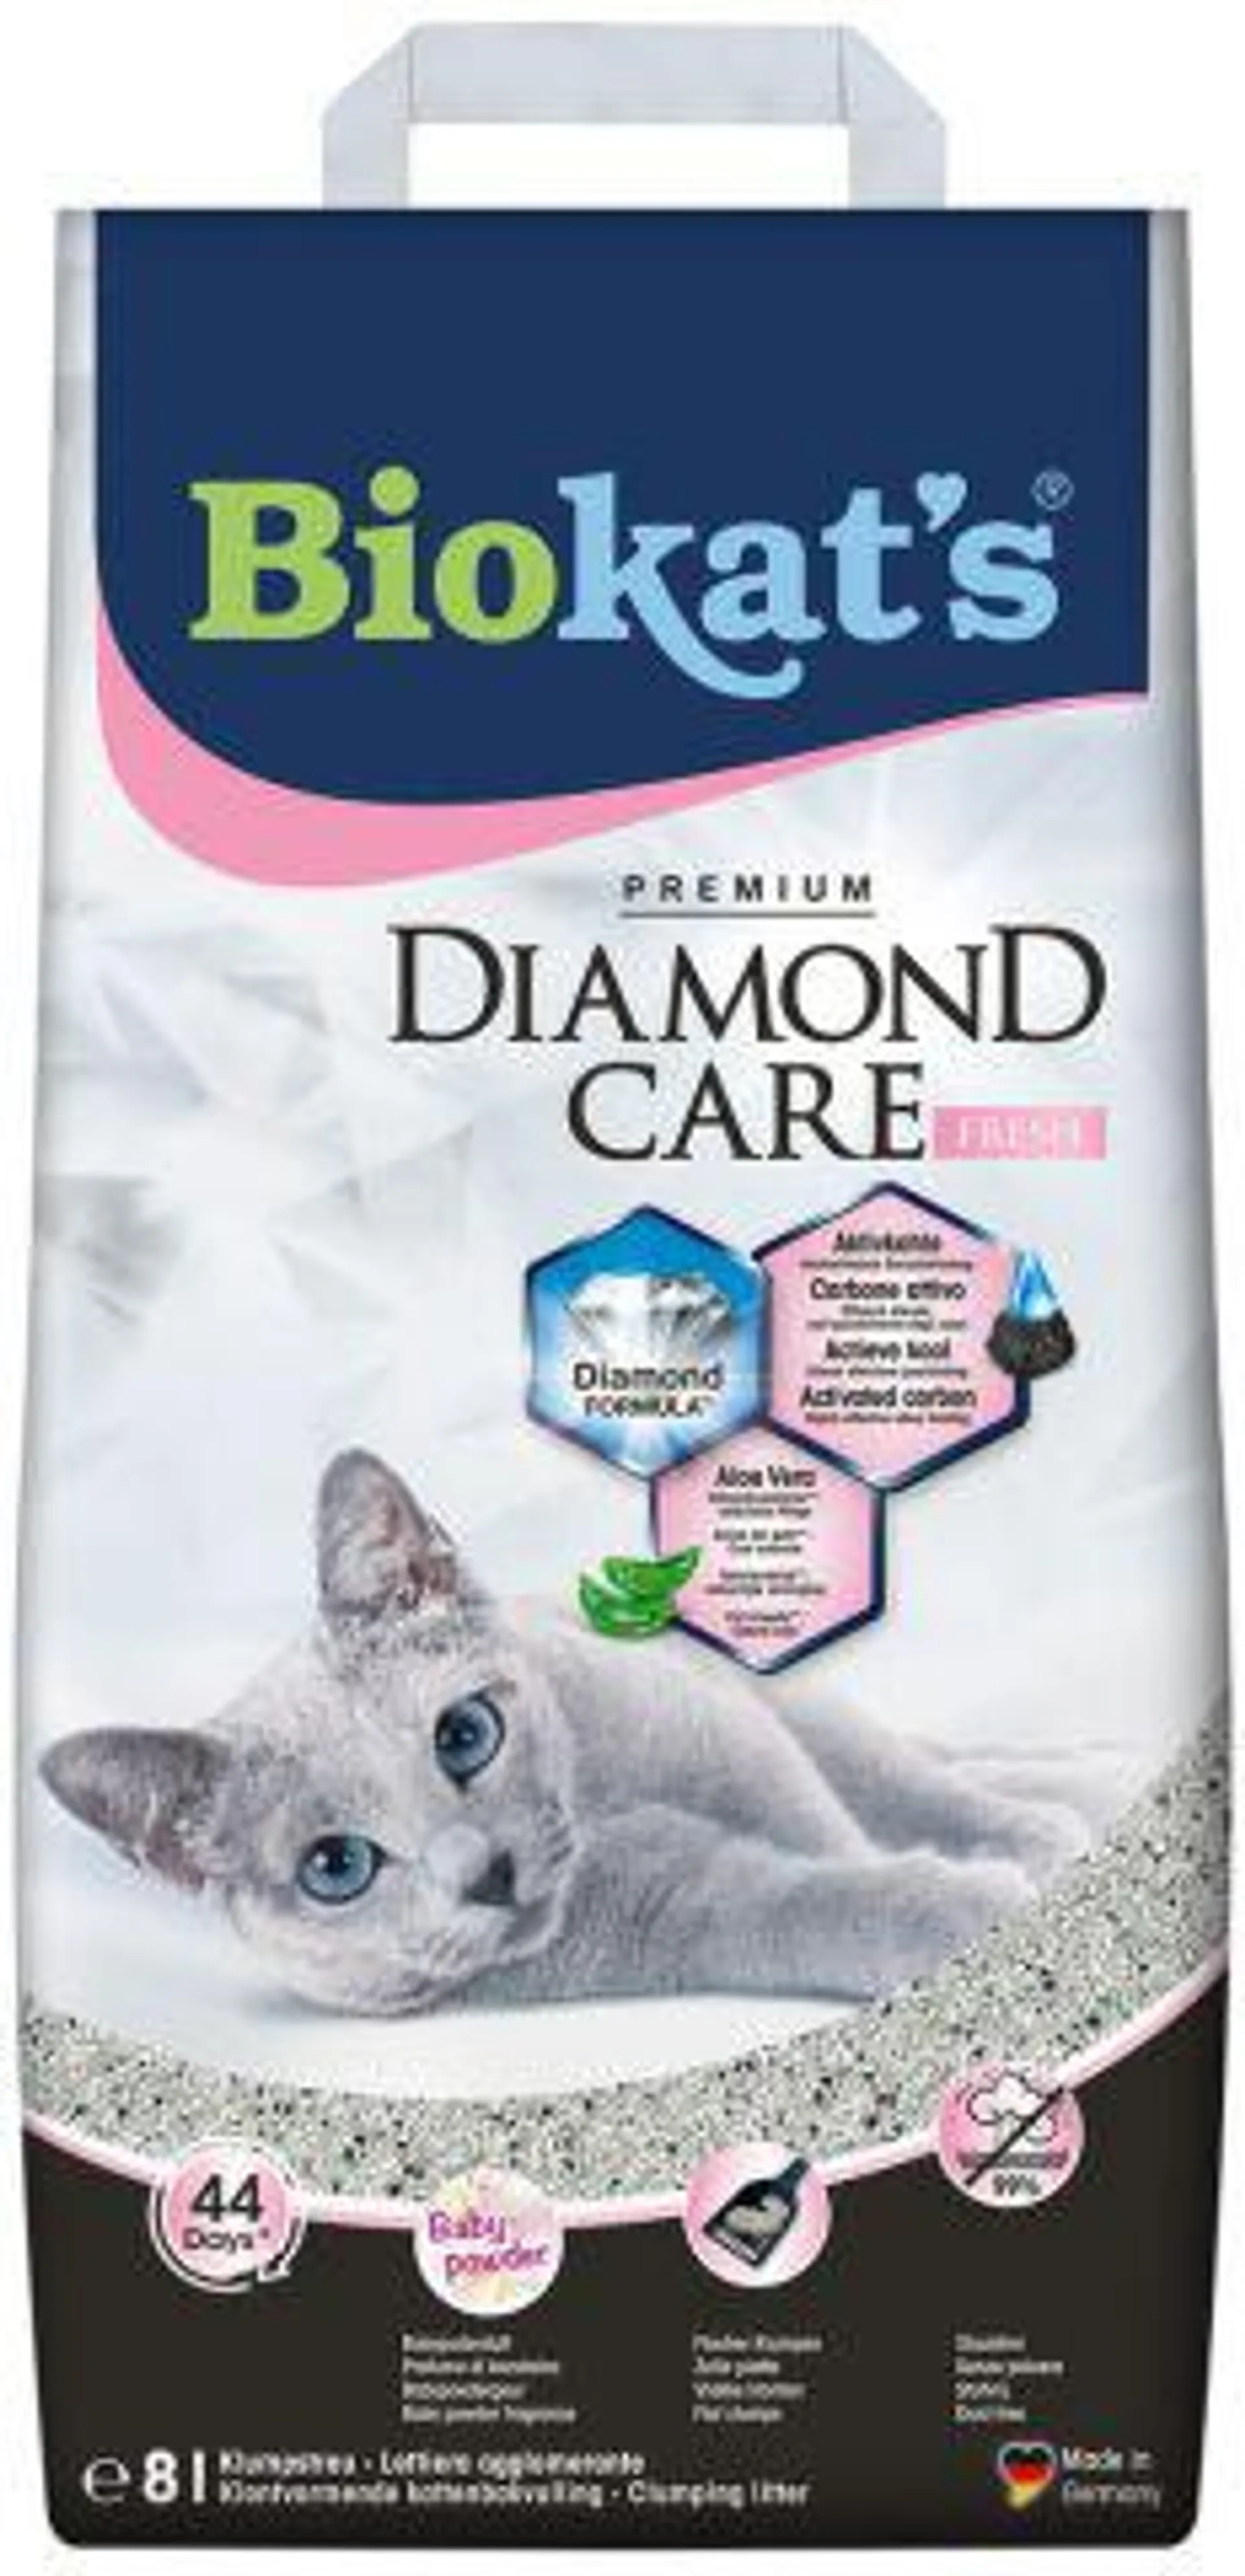 Biokat's Diamond Care Fresh - Kattenbakvulling - Babypoeder - Fijn - 8 L